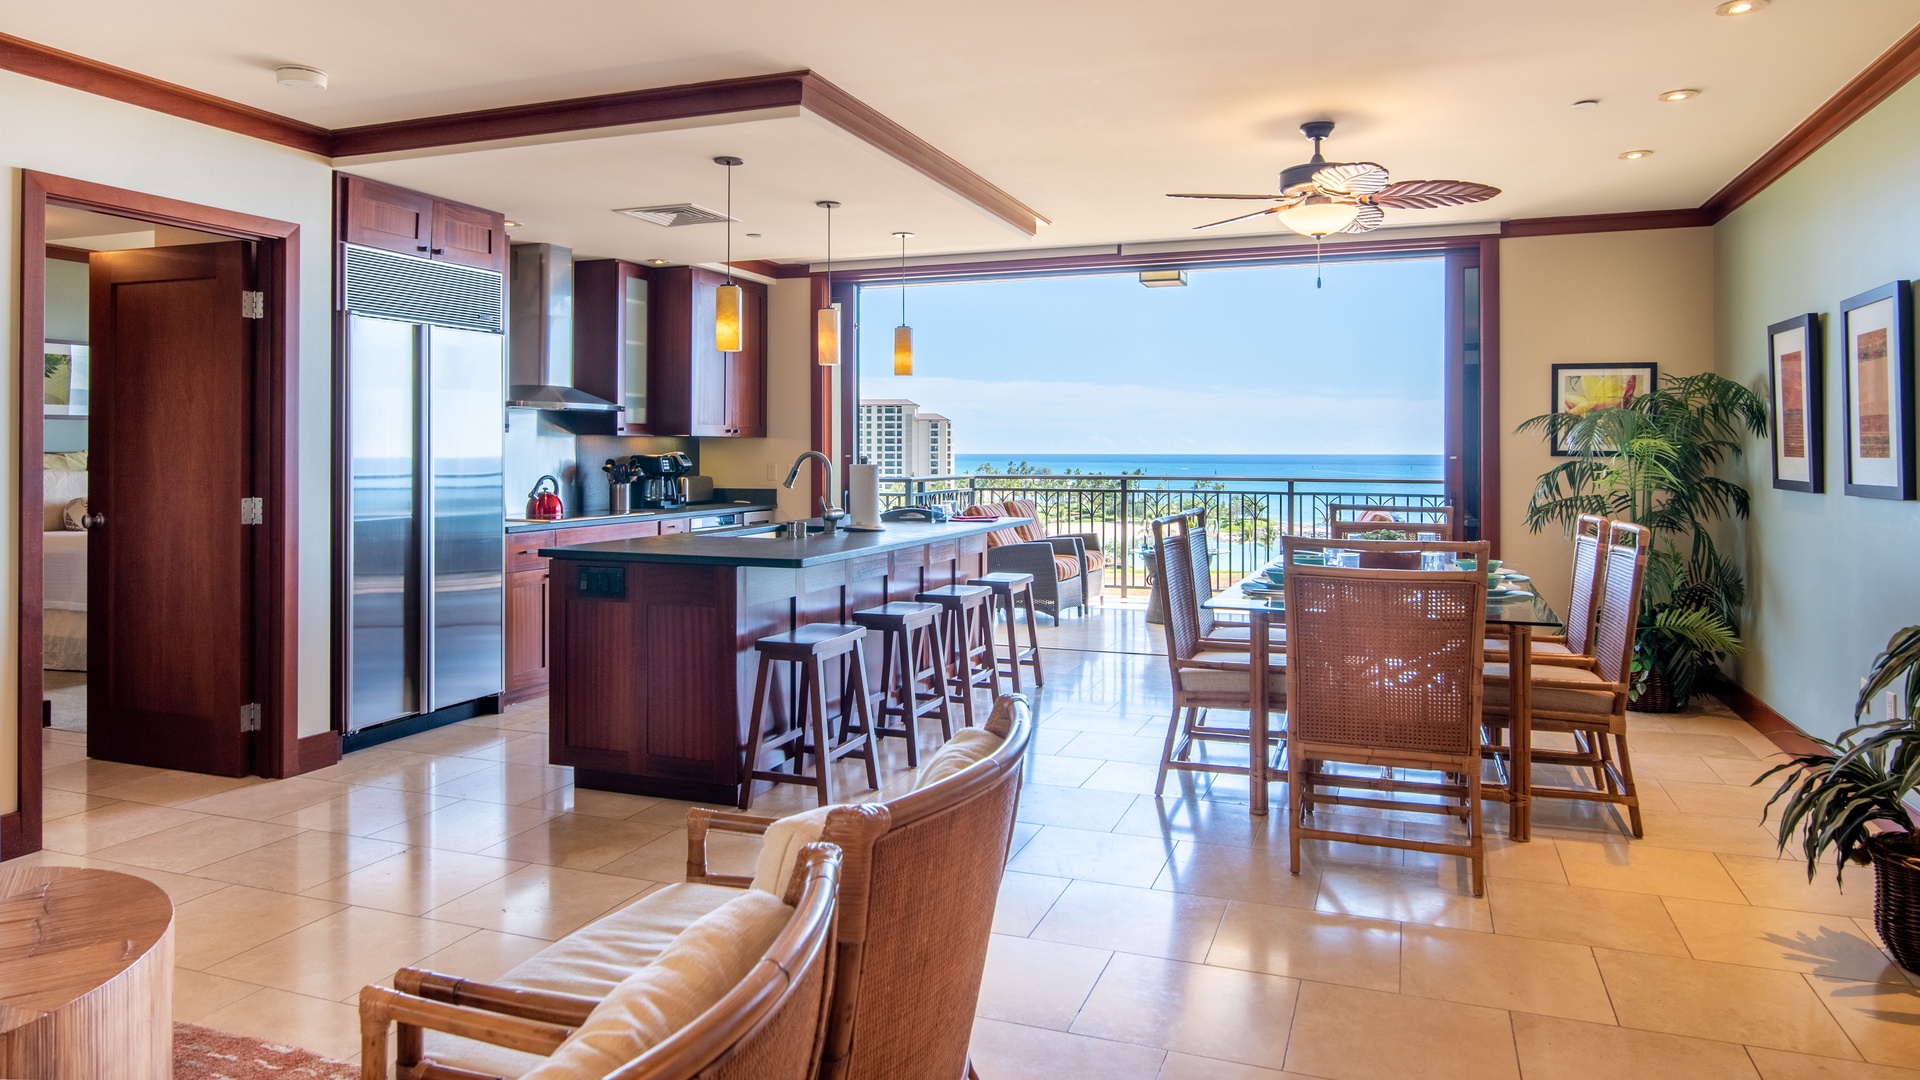 Kapolei Vacation Rentals, Ko Olina Beach Villas B901 - The open floor plan includes the kitchen, living and dining area.